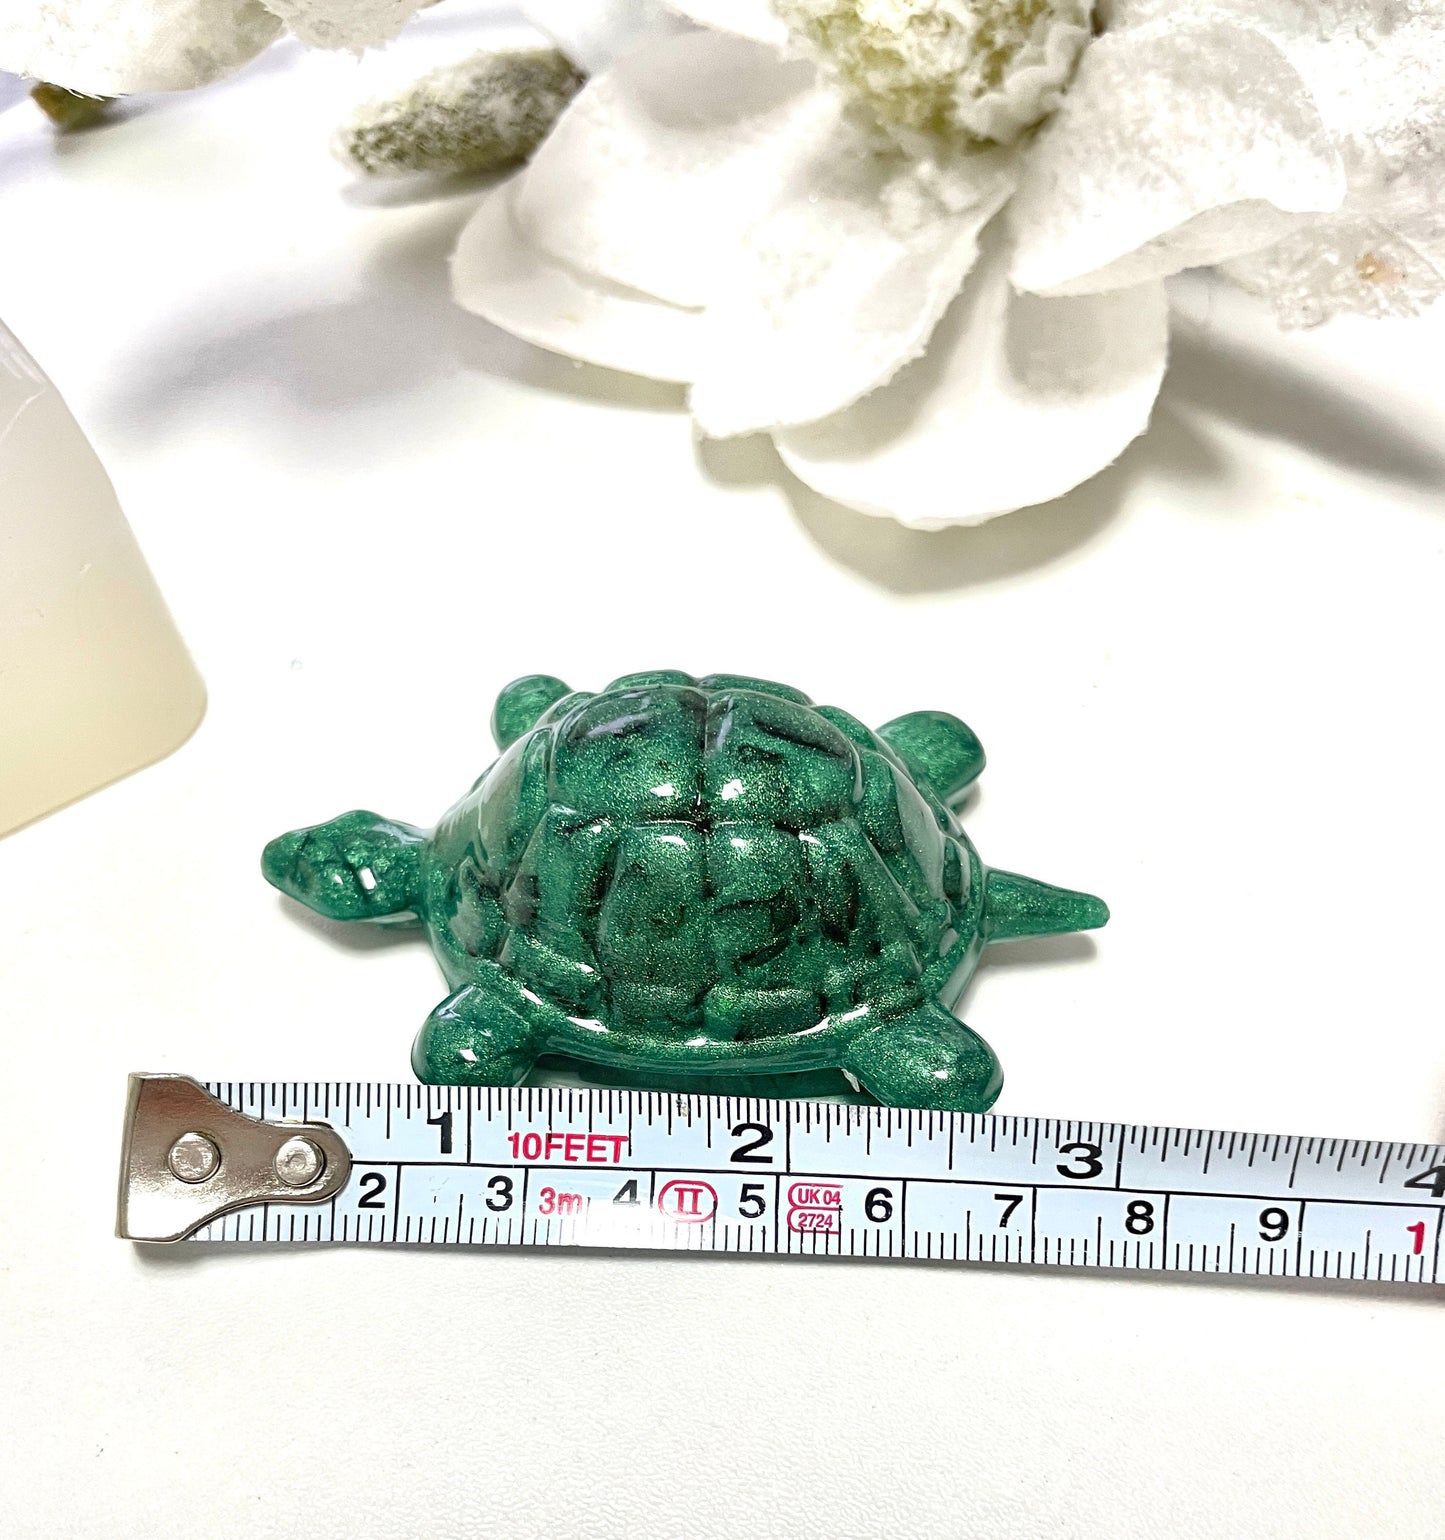 Meeresschildkröten-Silikonform: Vom Meer inspiriertes Bastelvergnügen